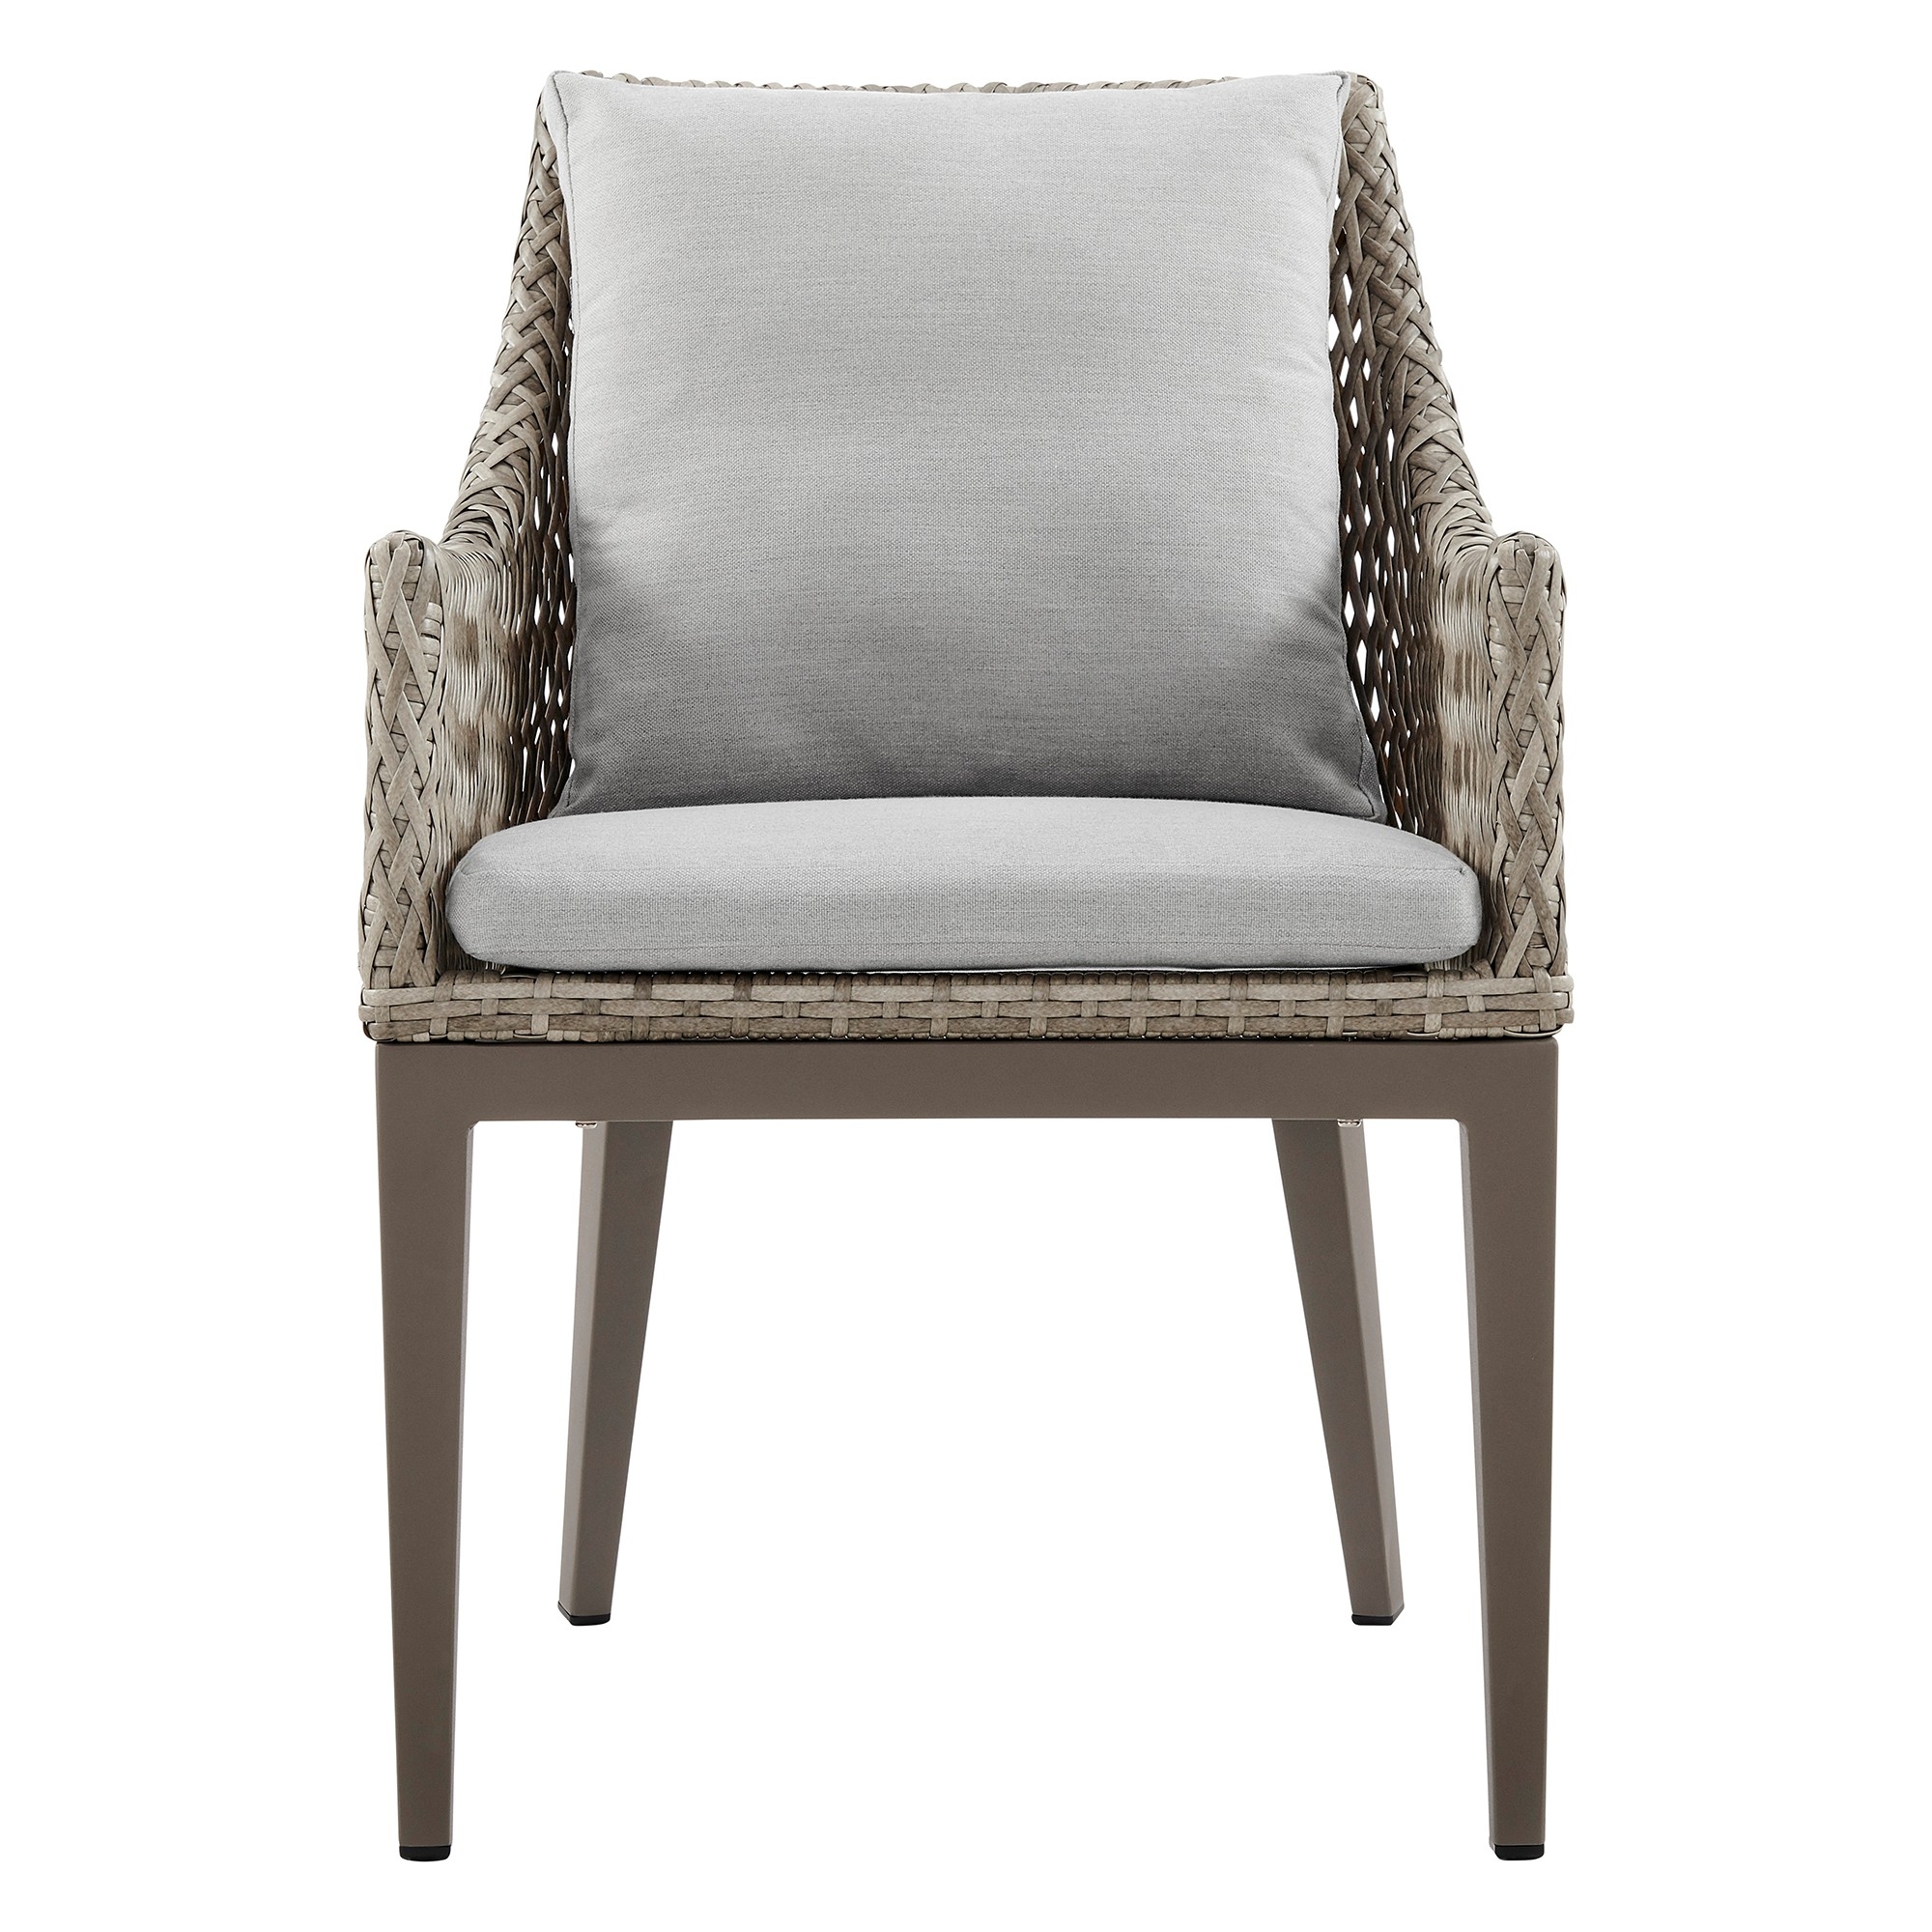 Leah 22 Inch Outdoor DIning Chair, Set Of 2, Wicker Weave, Aluminum Frame- Saltoro Sherpi